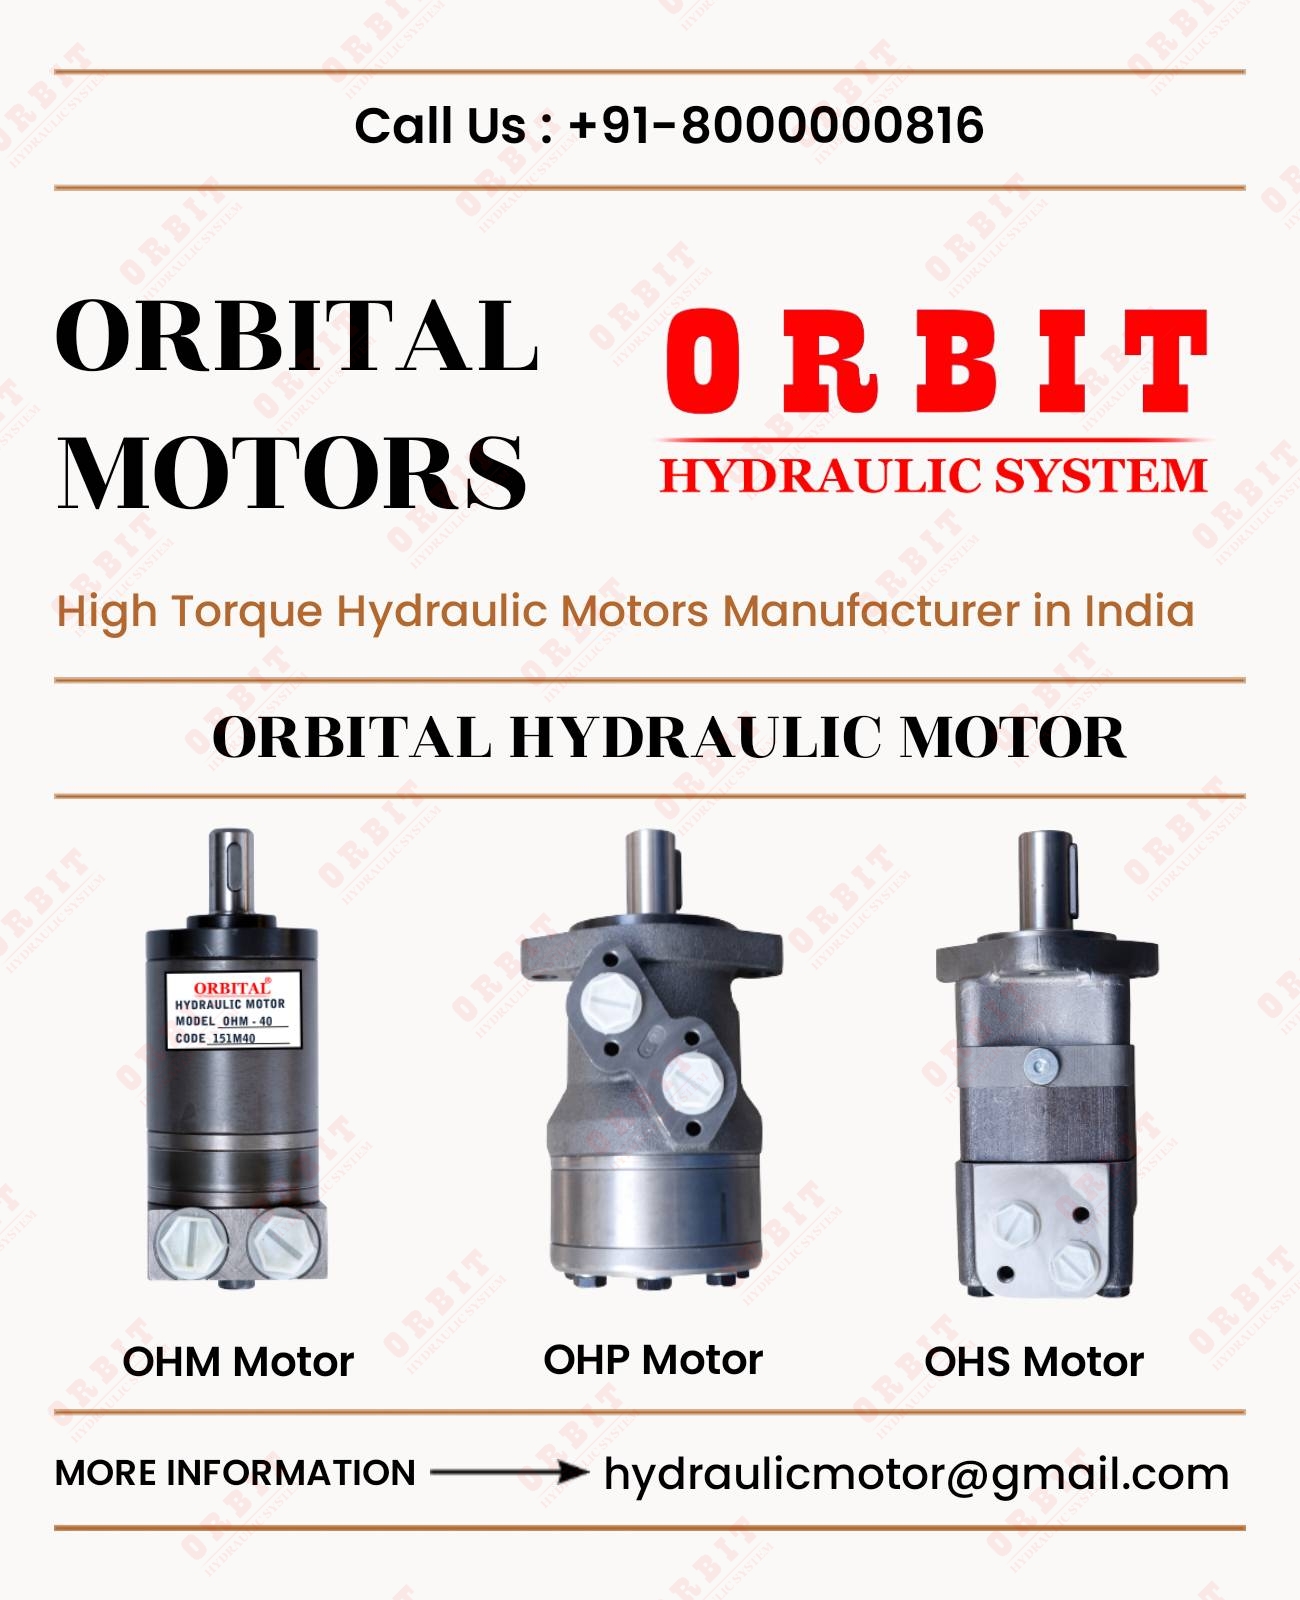 Danfoss OMM Hydraulic Motor In India